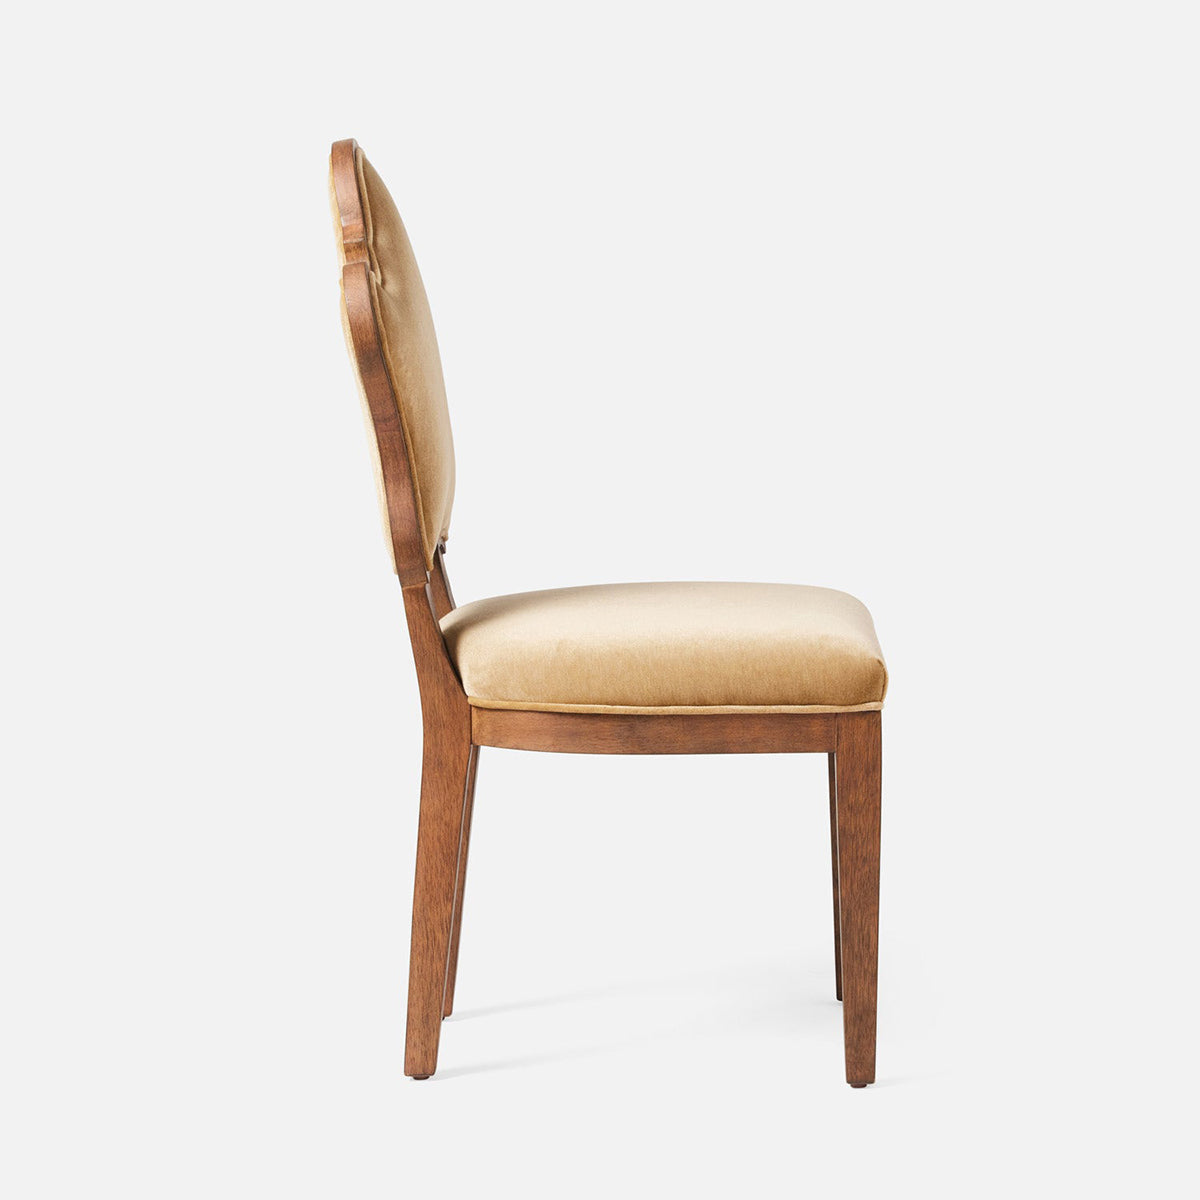 Made Goods Madisen Ornate Back Dining Chair in Ettrick Cotton Jute